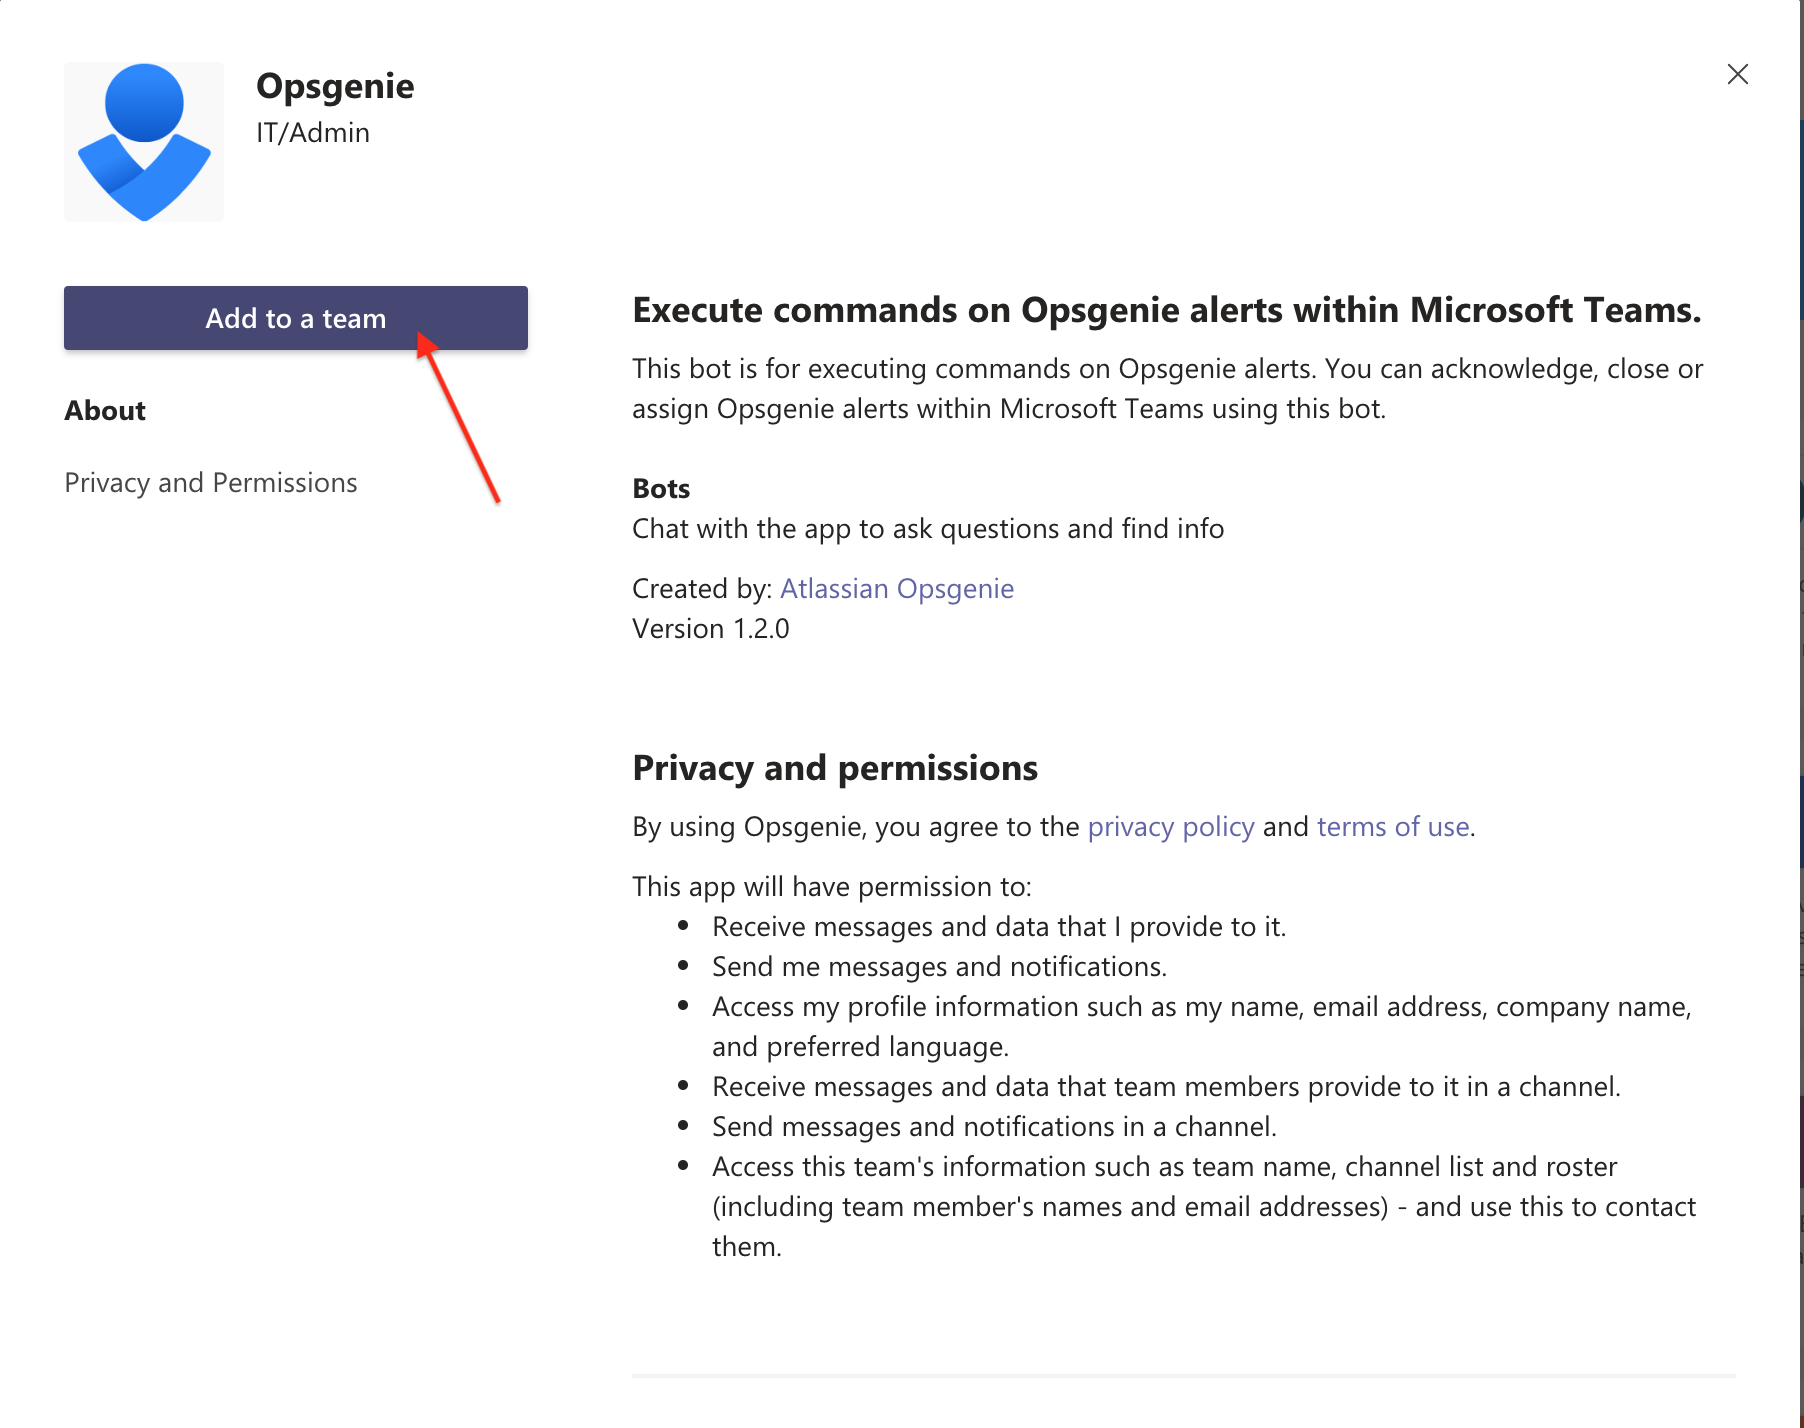 Microsoft Teams add Opsgenie app